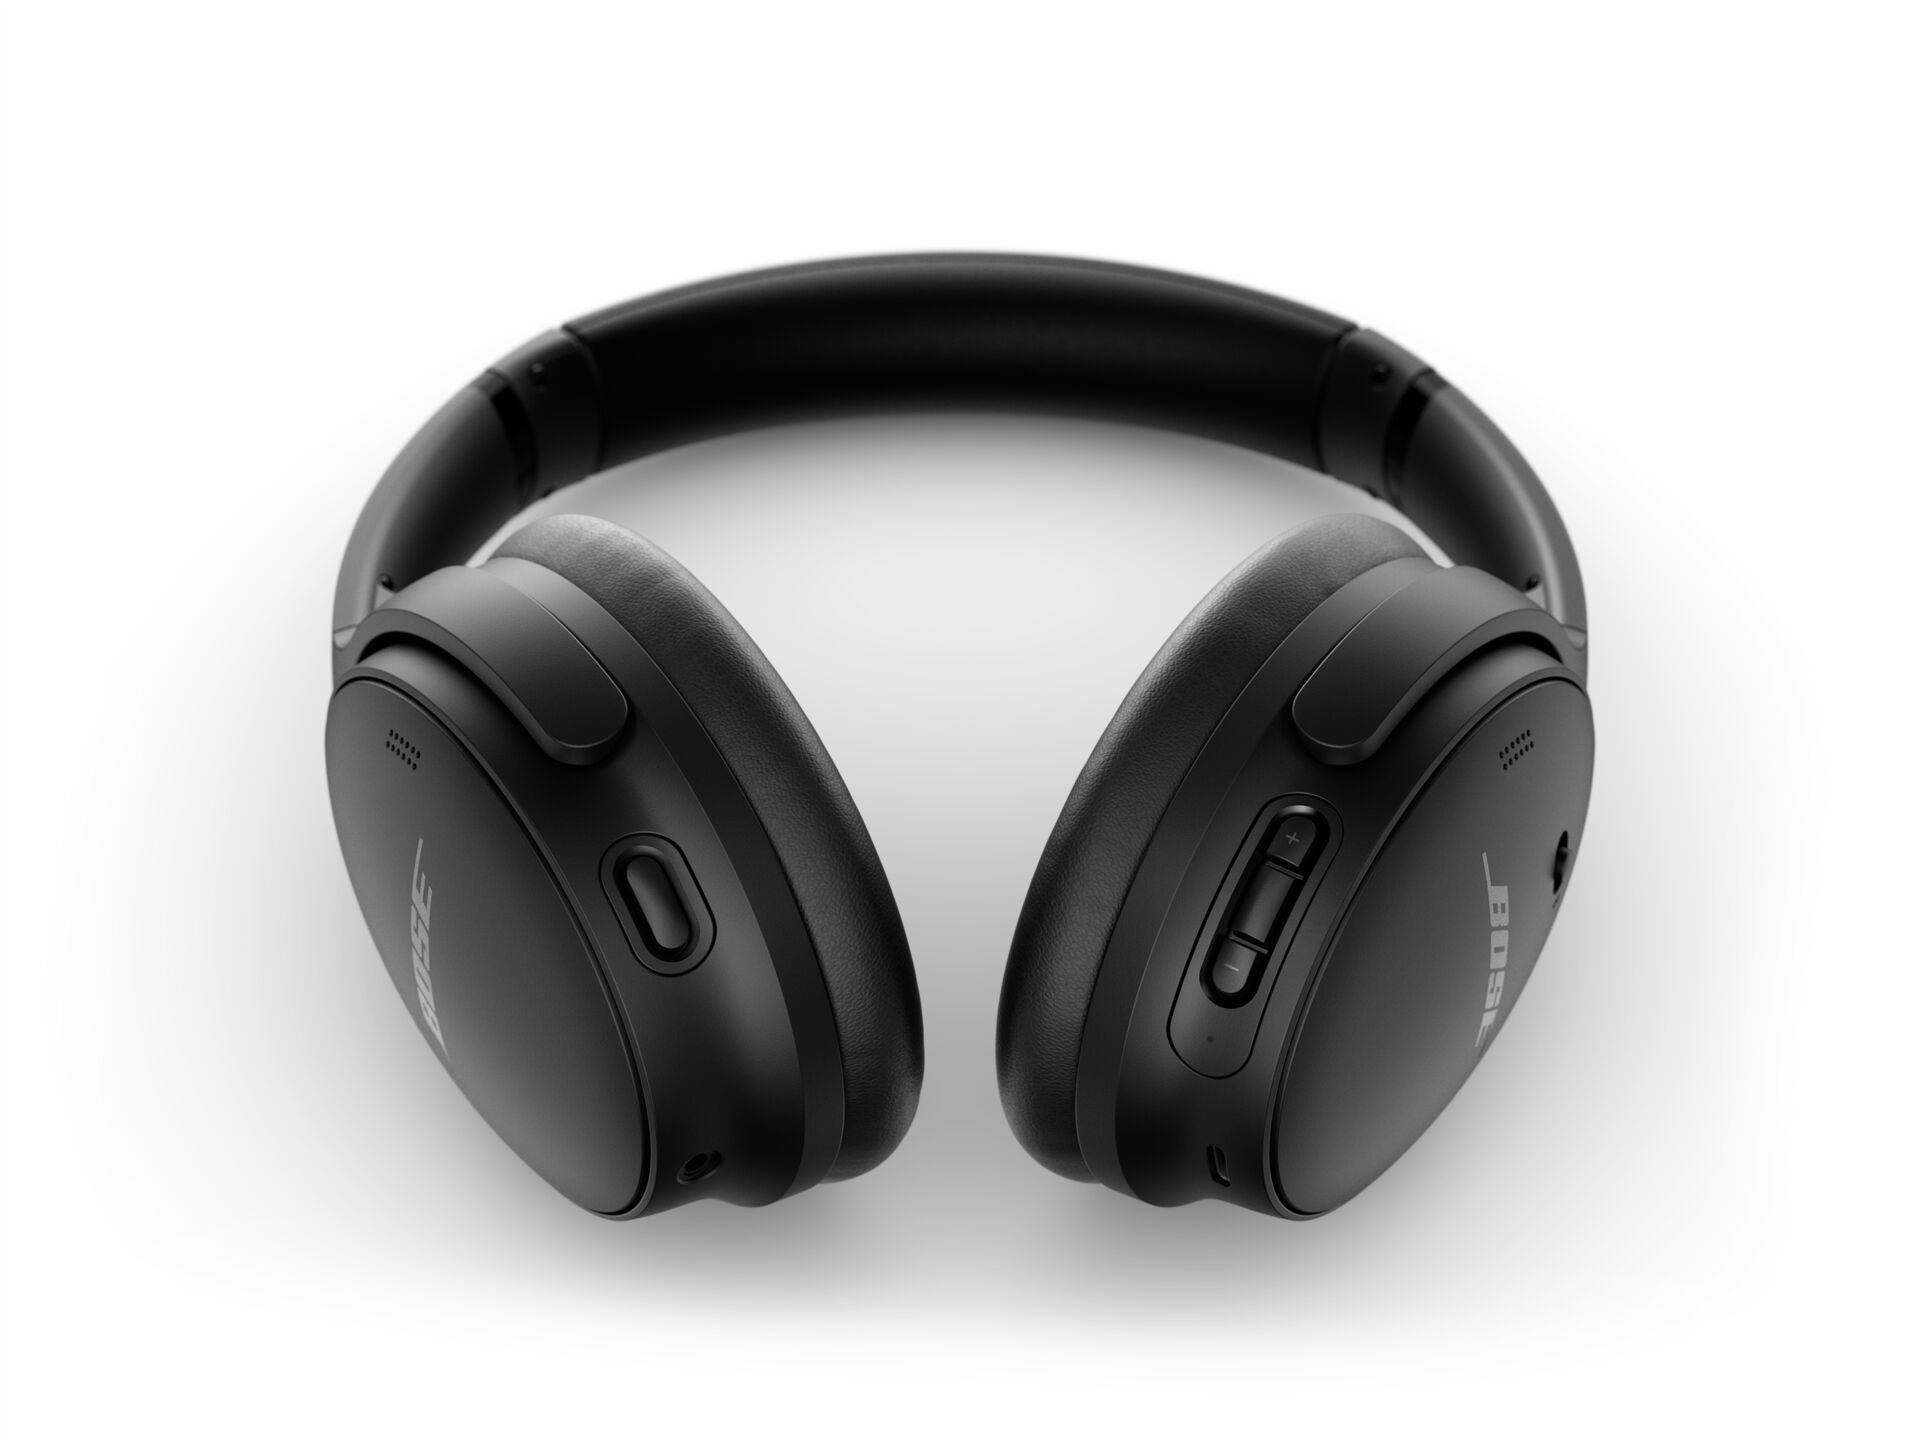 Bose QuietComfort 35 (Series I) Wireless Headphones, Noise